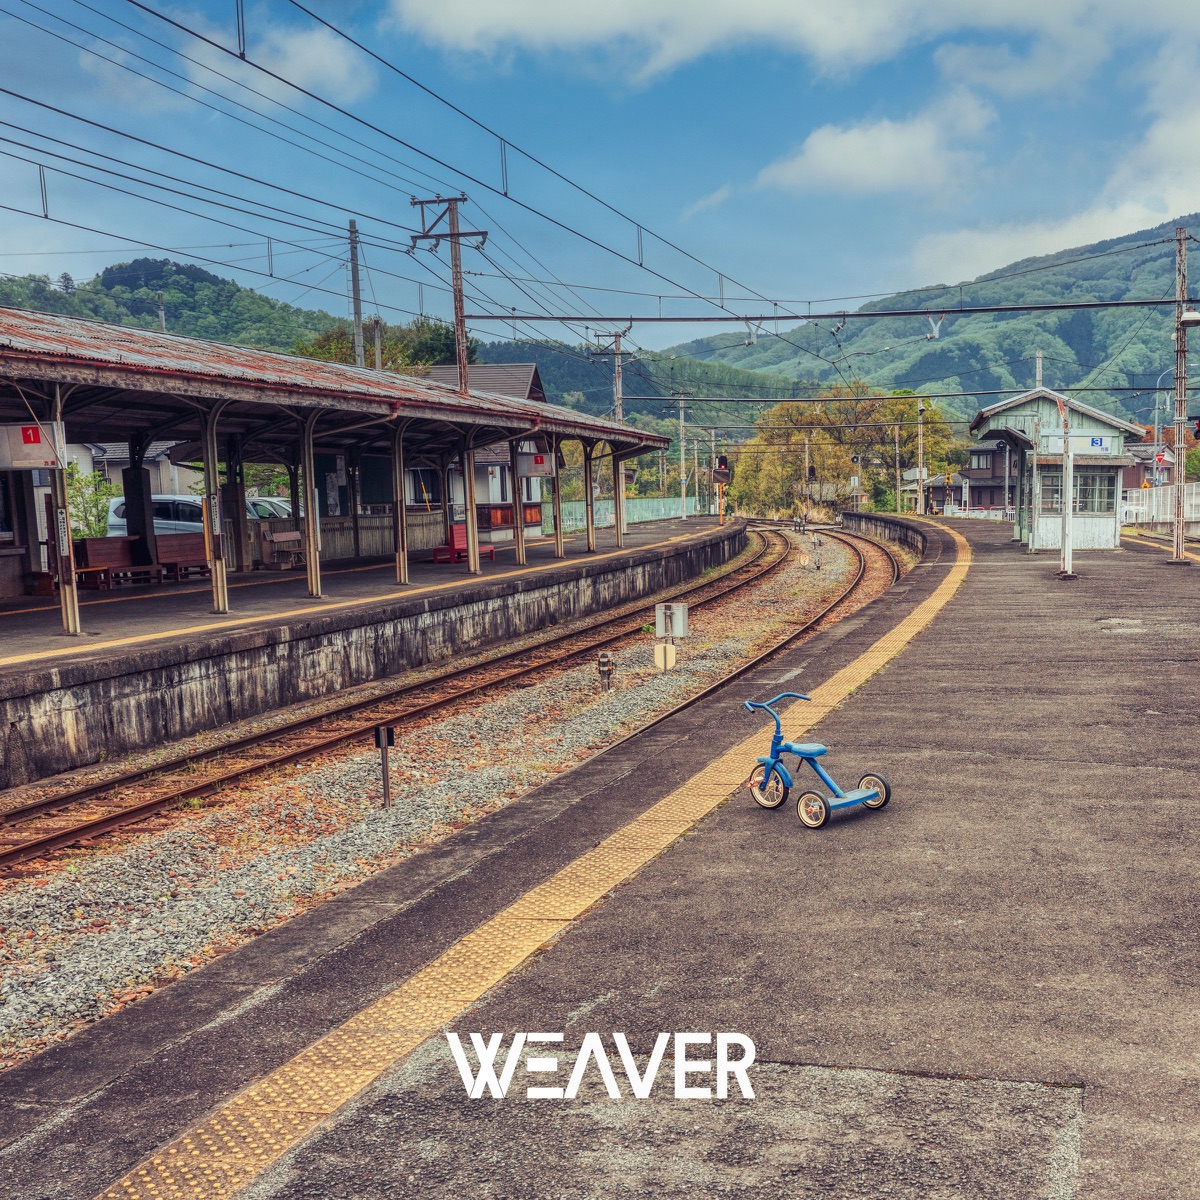 『WEAVER - on the rail (arriving at the terminal)』収録の『WEAVER』ジャケット